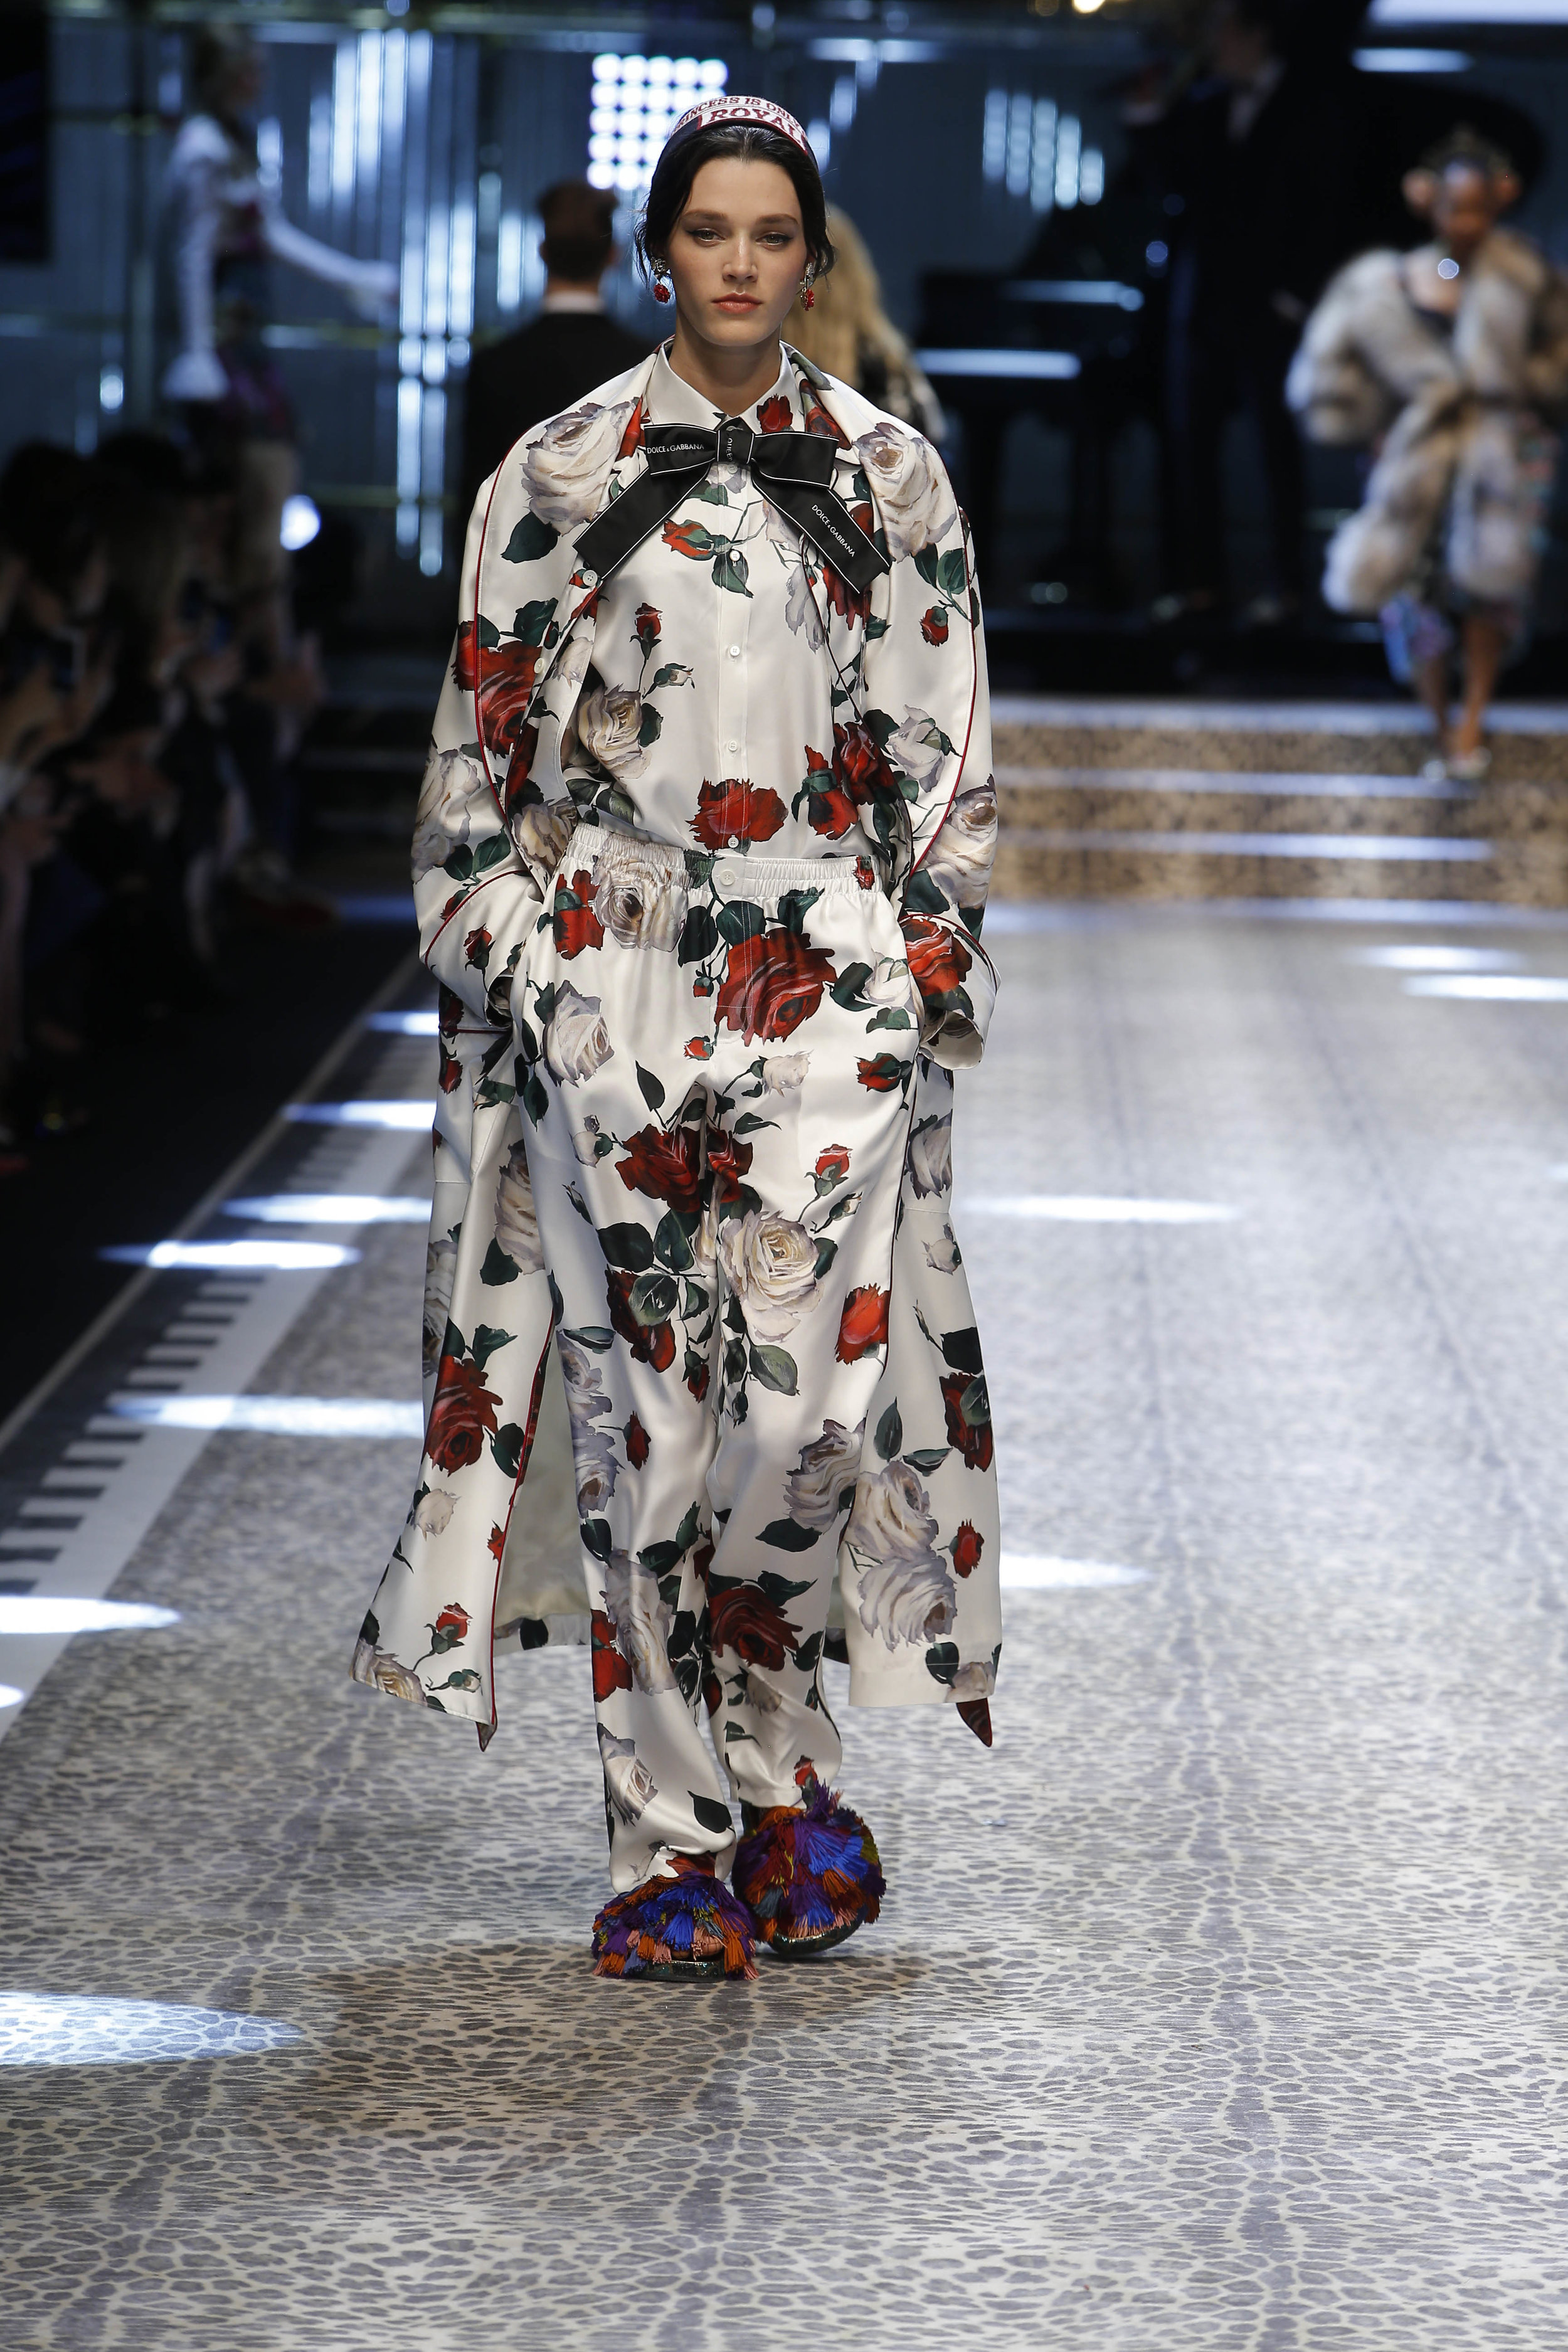 Dolce&Gabbana_women's fashion show fw17-18_Runway_images (19).jpg